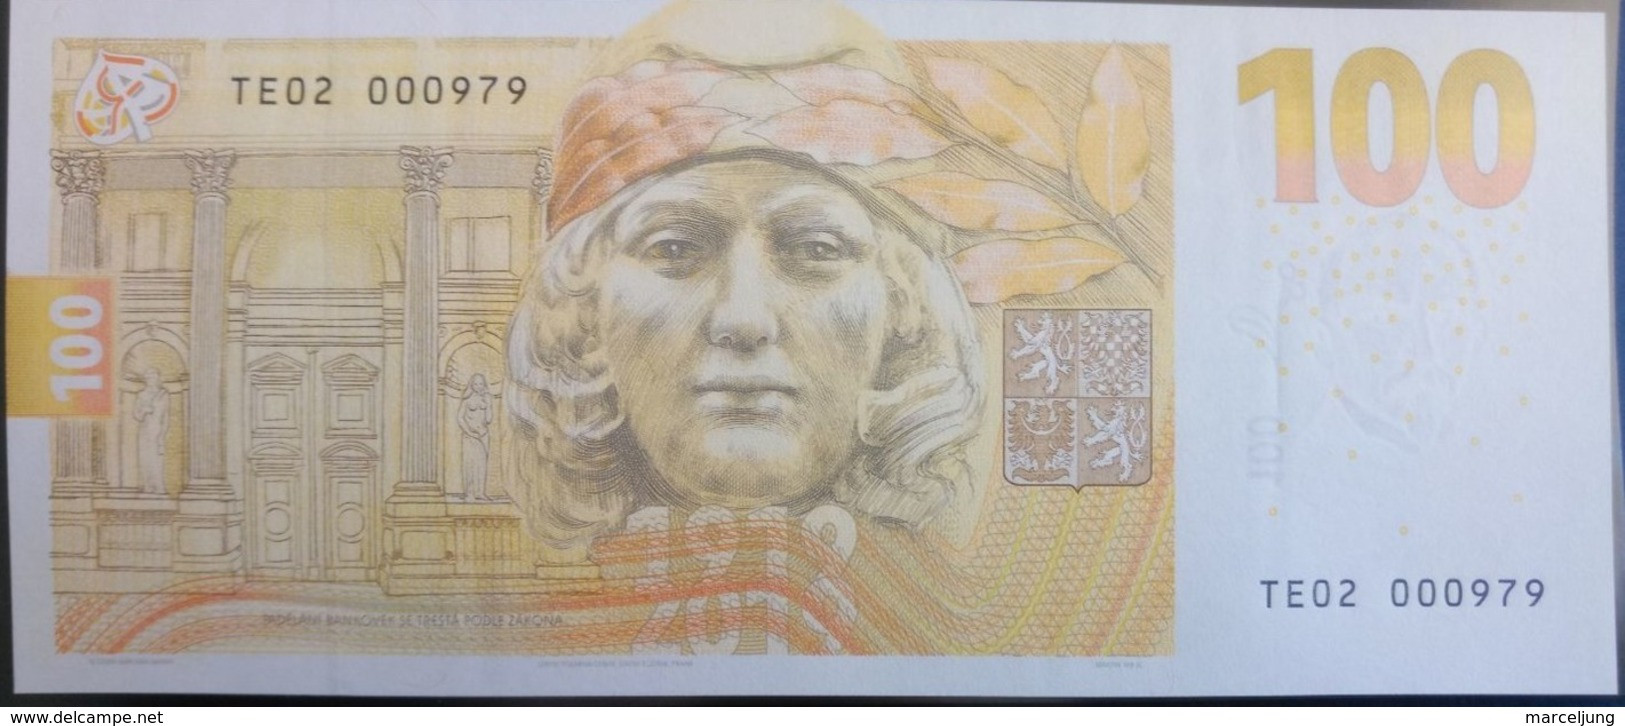 100 Korun/Kronen Czech Republic UNC 2019 Commemorative Banknote, Rare / GEDENKBANKNOTE SELTEN - Czech Republic